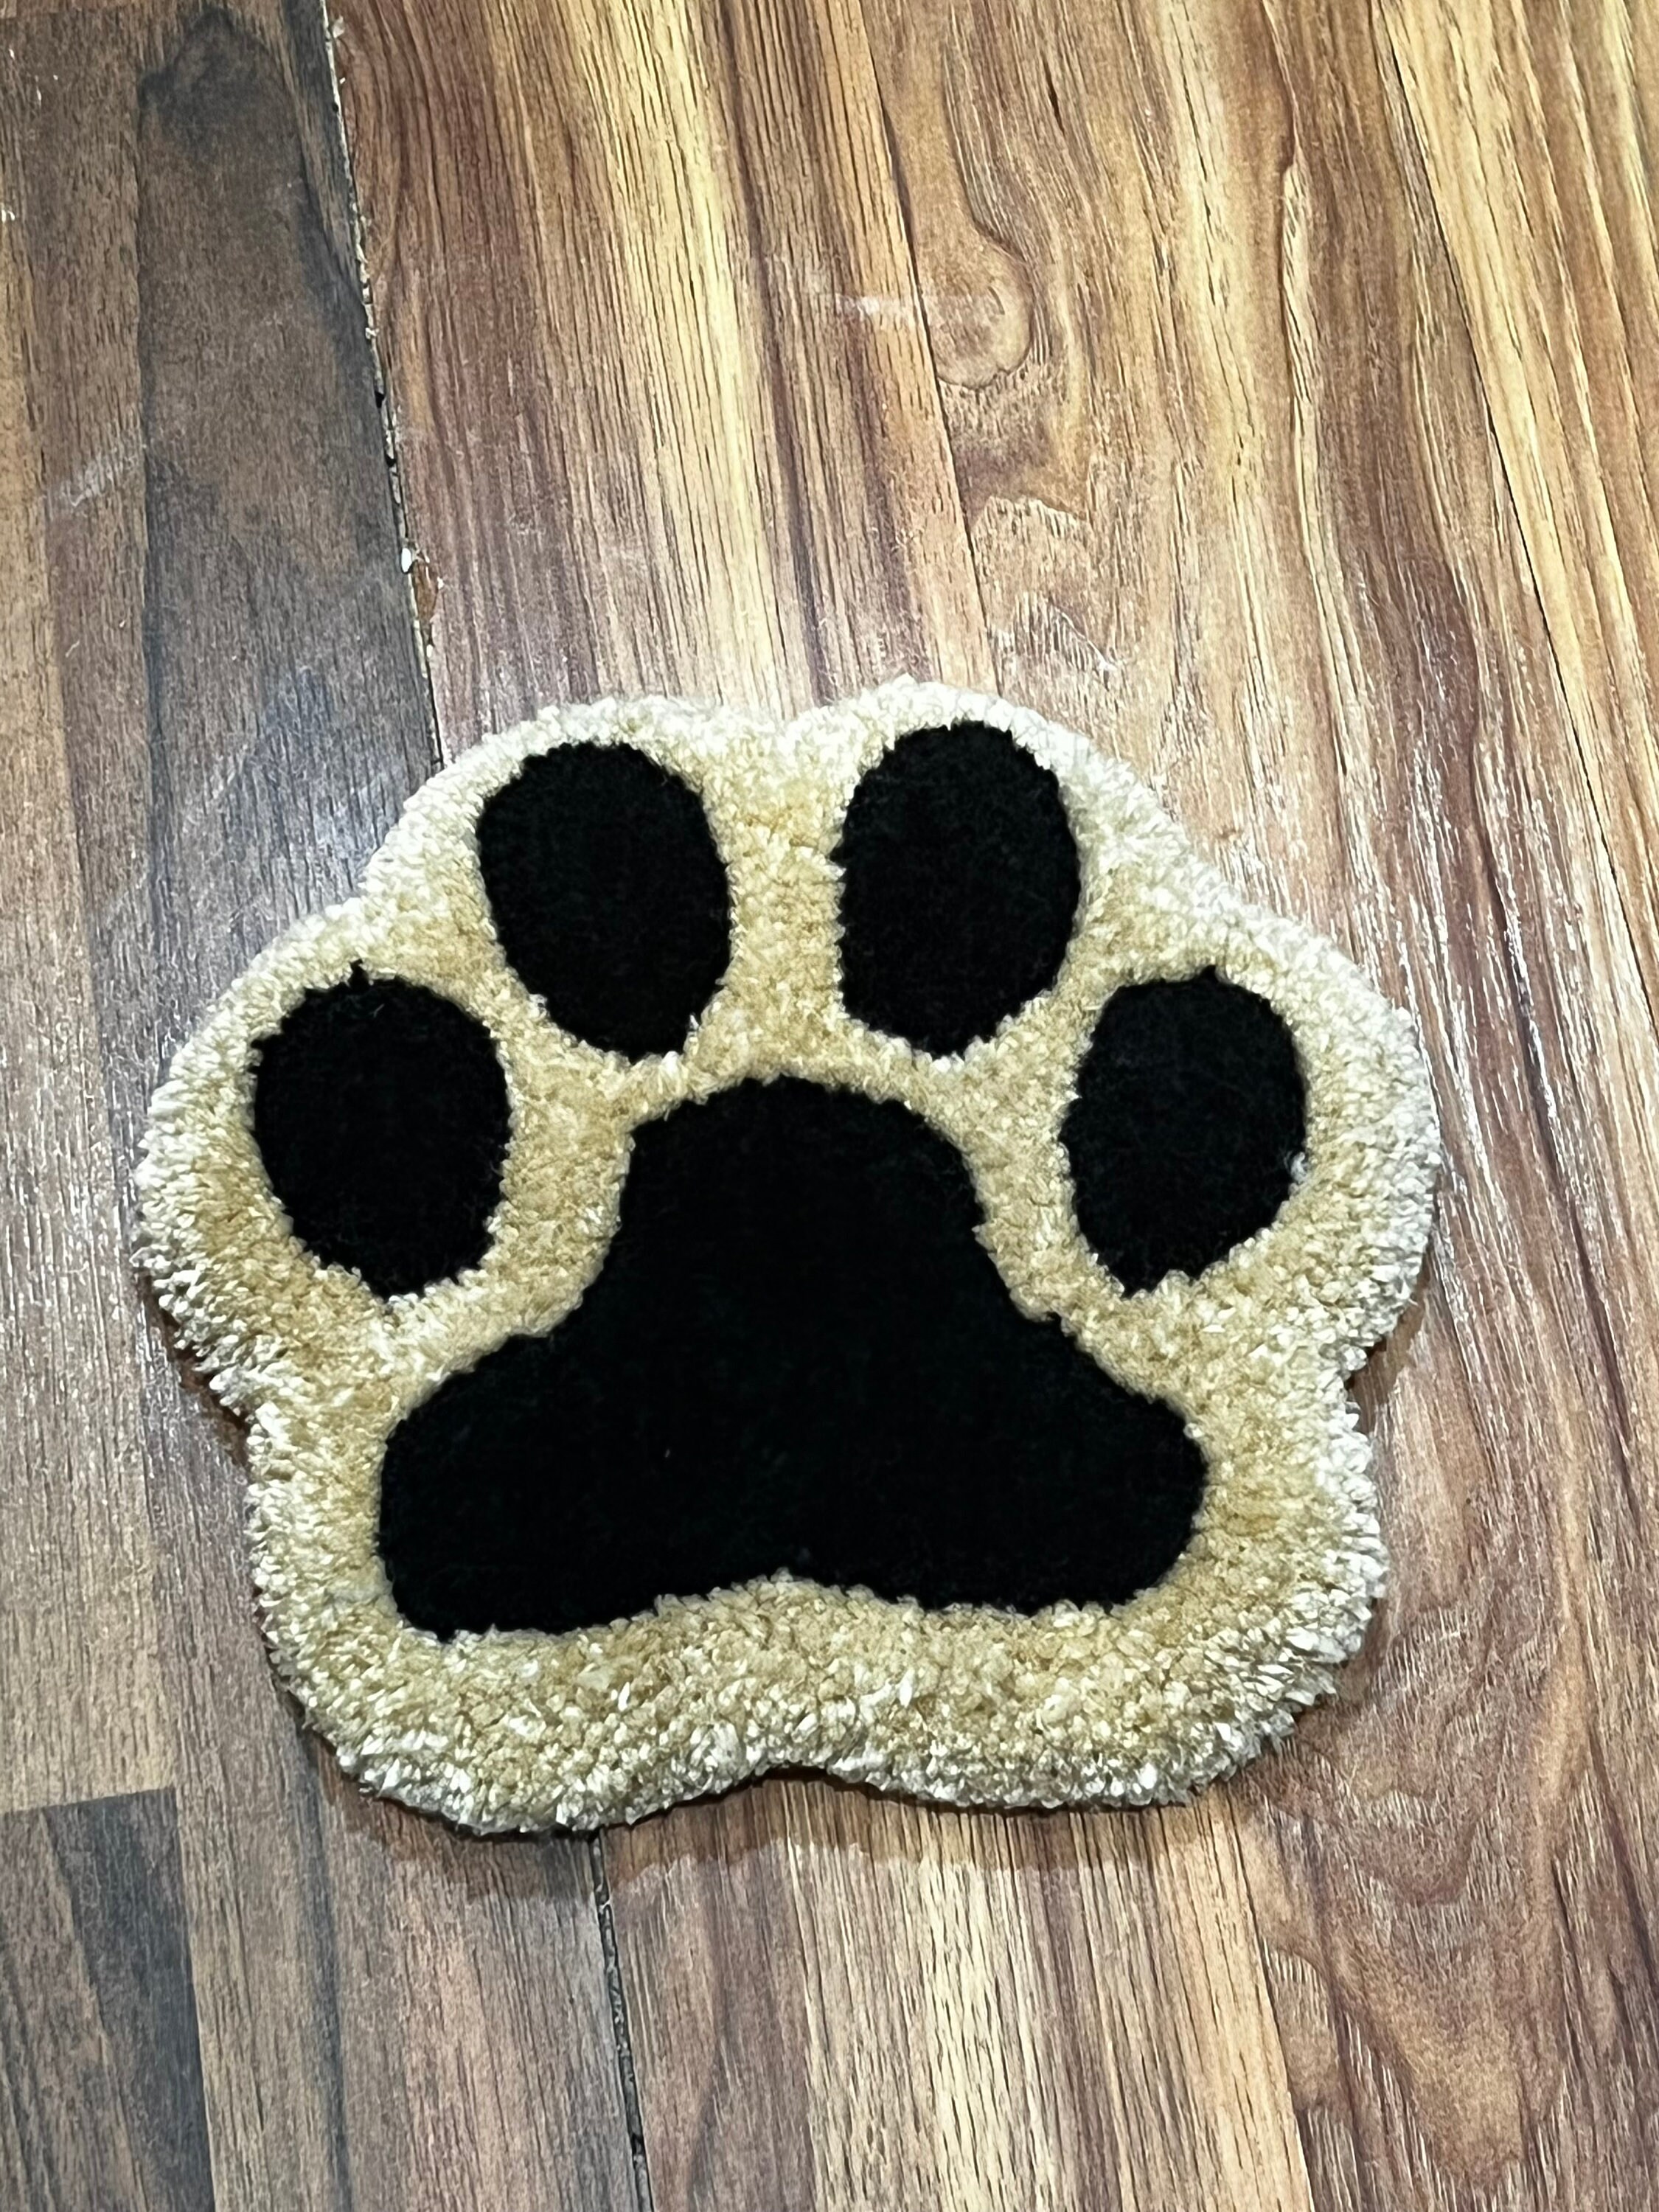 GODPOK Footprint Control Animal Paw Flat Dog Cat Pawprint Sign Symbol Pattern Foot Grooming Rug Doormat Bath Mat 23.6x15.7 inch